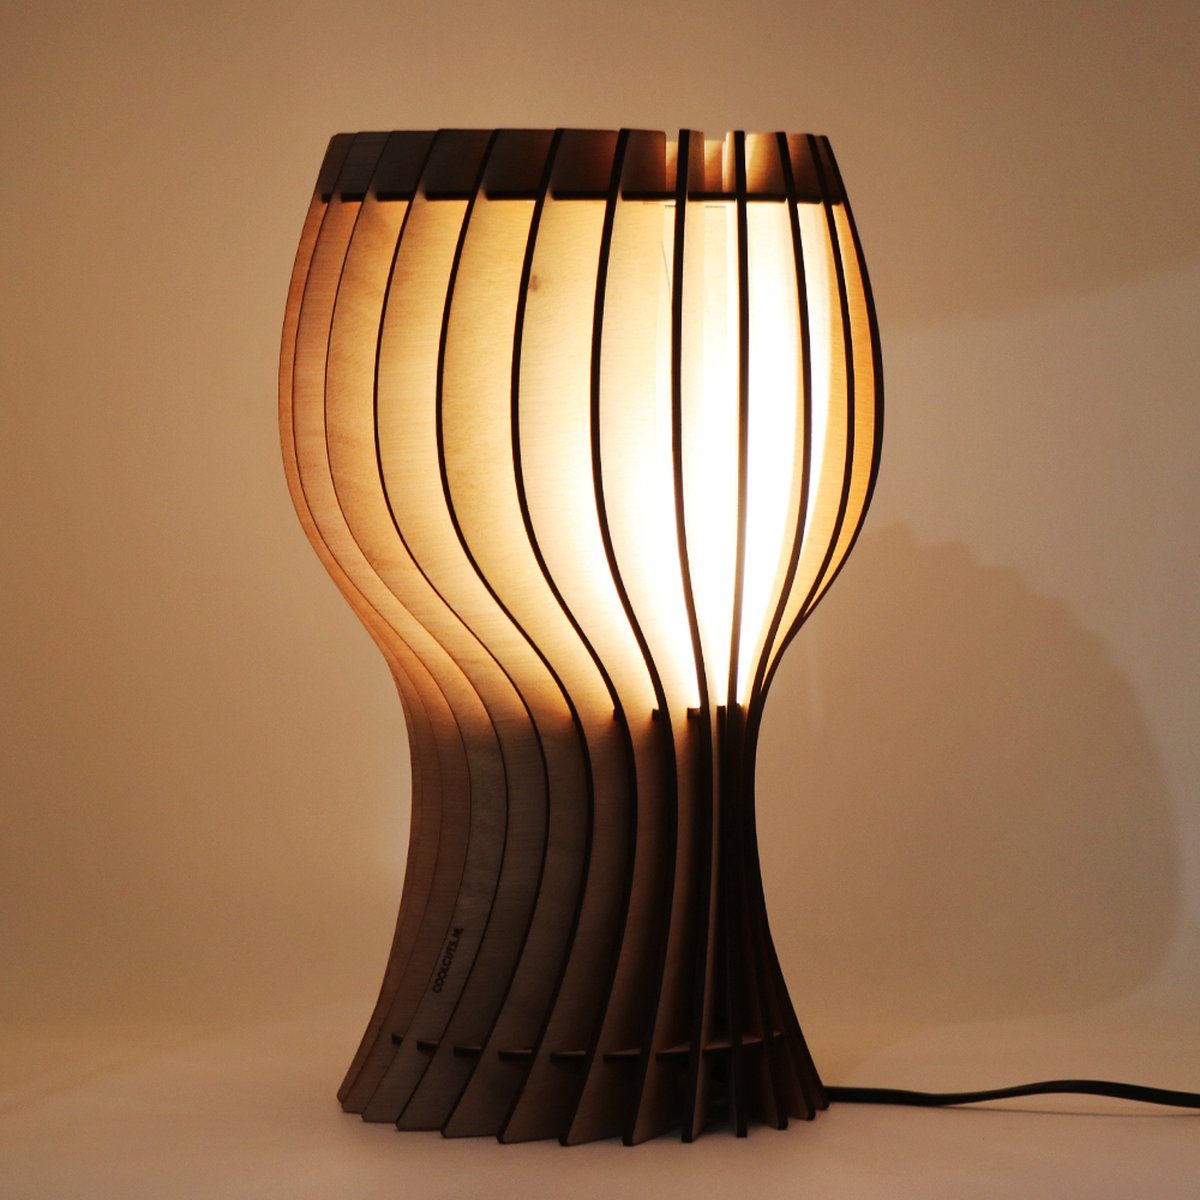 Tafellamp Viinilasi Ø23 cm blankhout - Houten tafellamp - Dutch Design - Verlichting voor woonkamer, eetkamer, of slaapkamer - Kant en klaar gemonteerde kamerlamp - CoolCuts